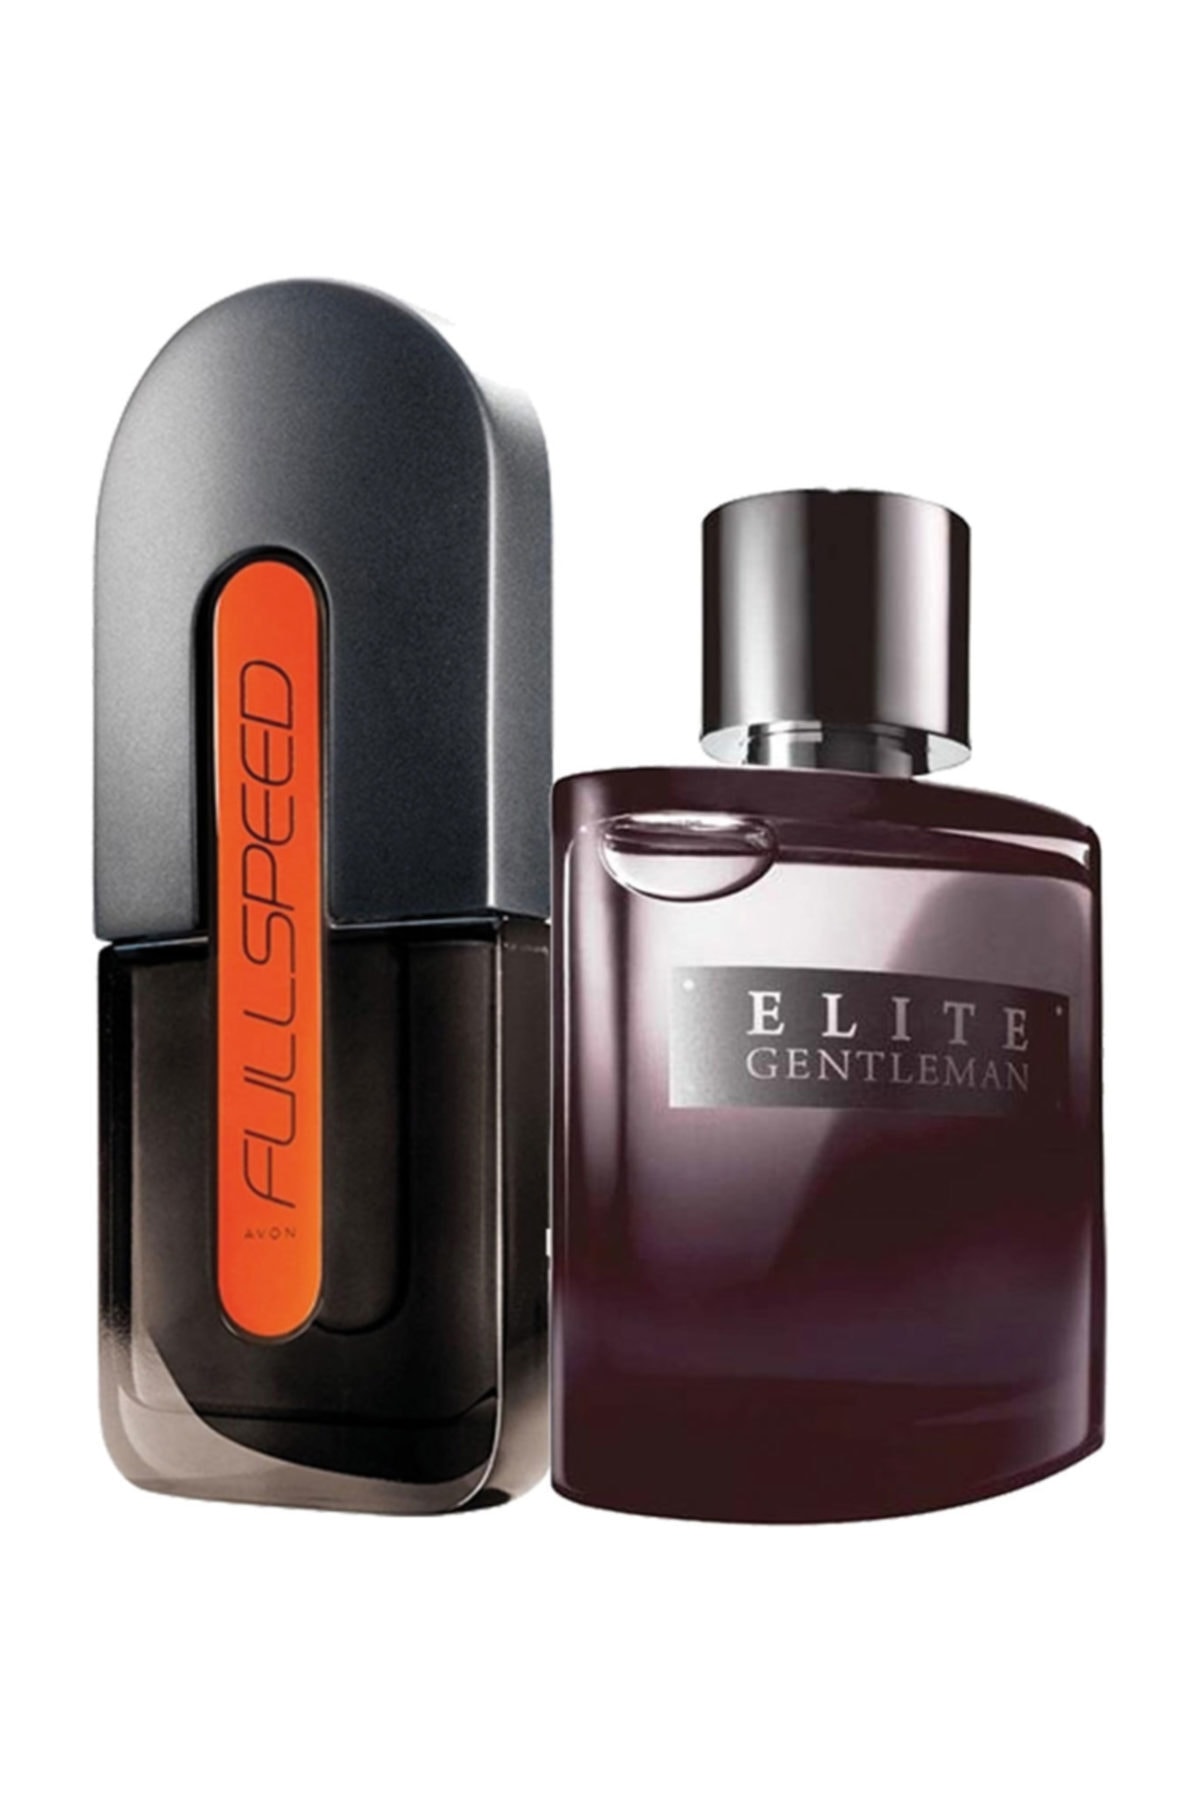 AVON Full Speed ve Elite Gentleman Erkek Parfüm Seti 5050000000321